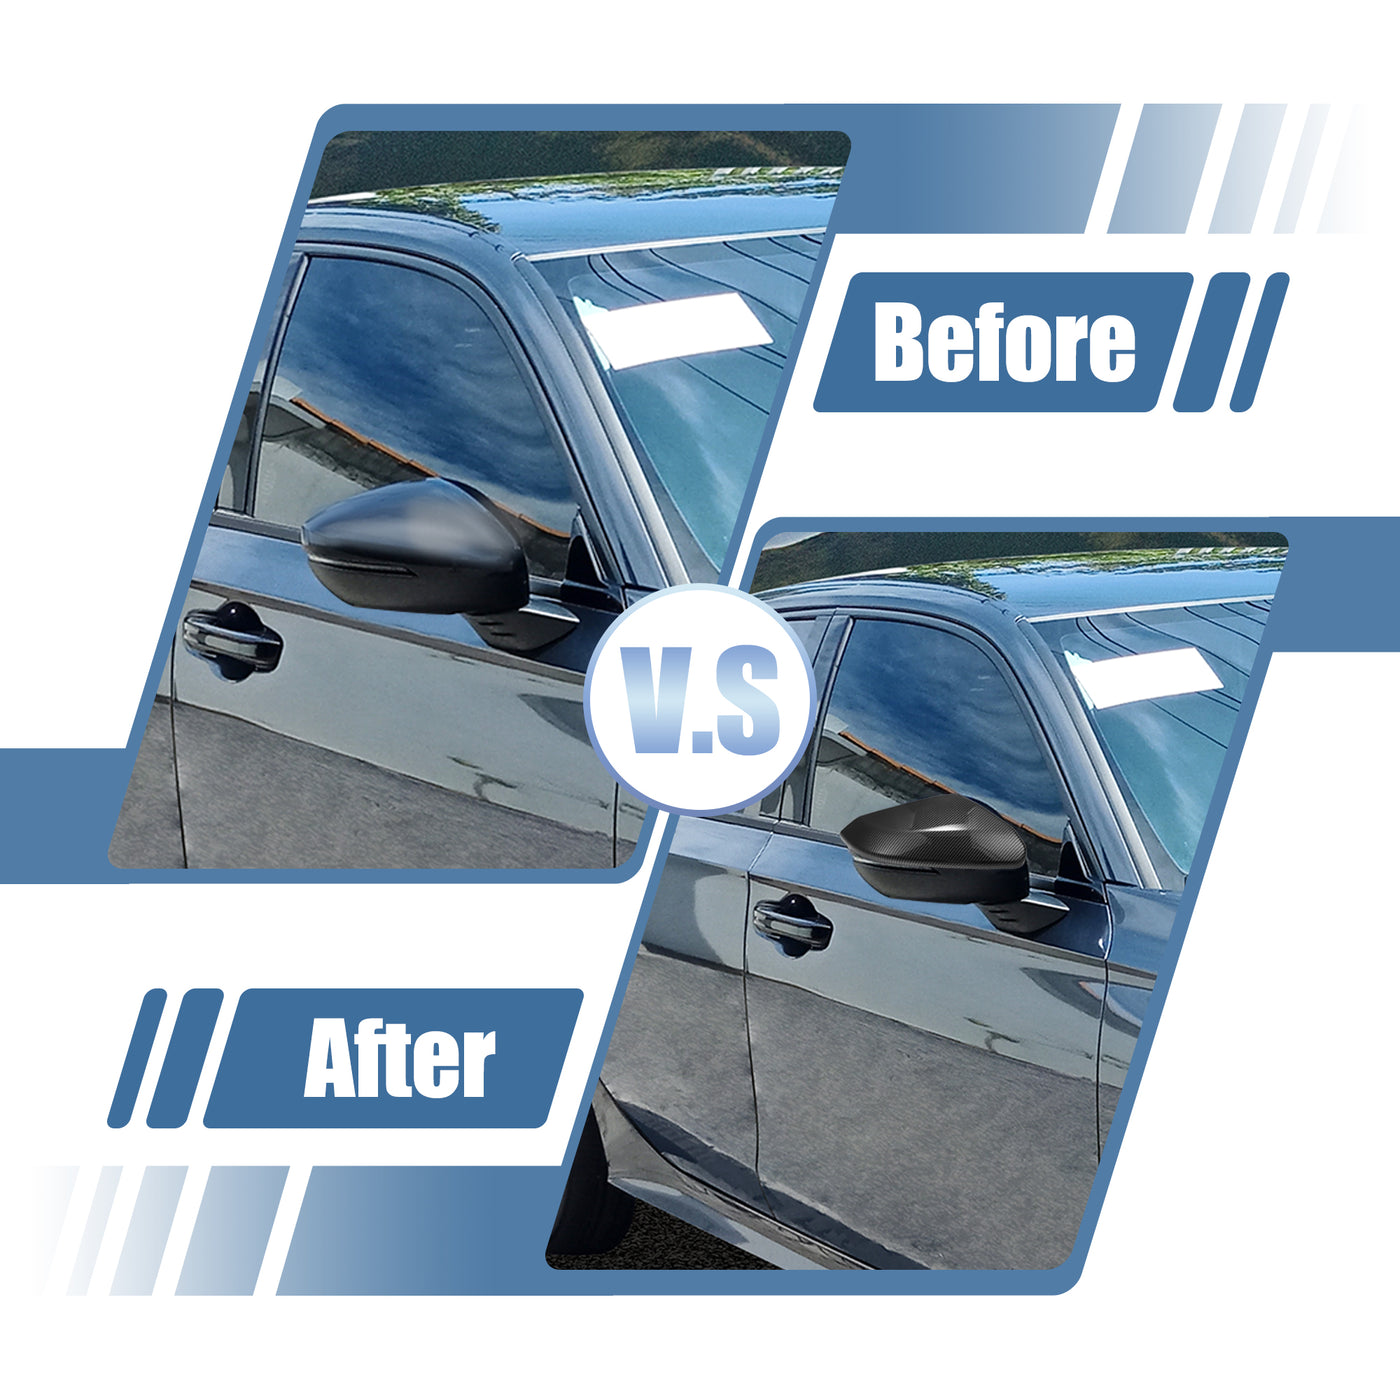 X AUTOHAUX 1 Pair ABS Carbon Fiber Pattern Black Car Door Side Rearview Mirror Cover Trim for Honda 10th Gen Civic 2016-2021 Exterior Accessories